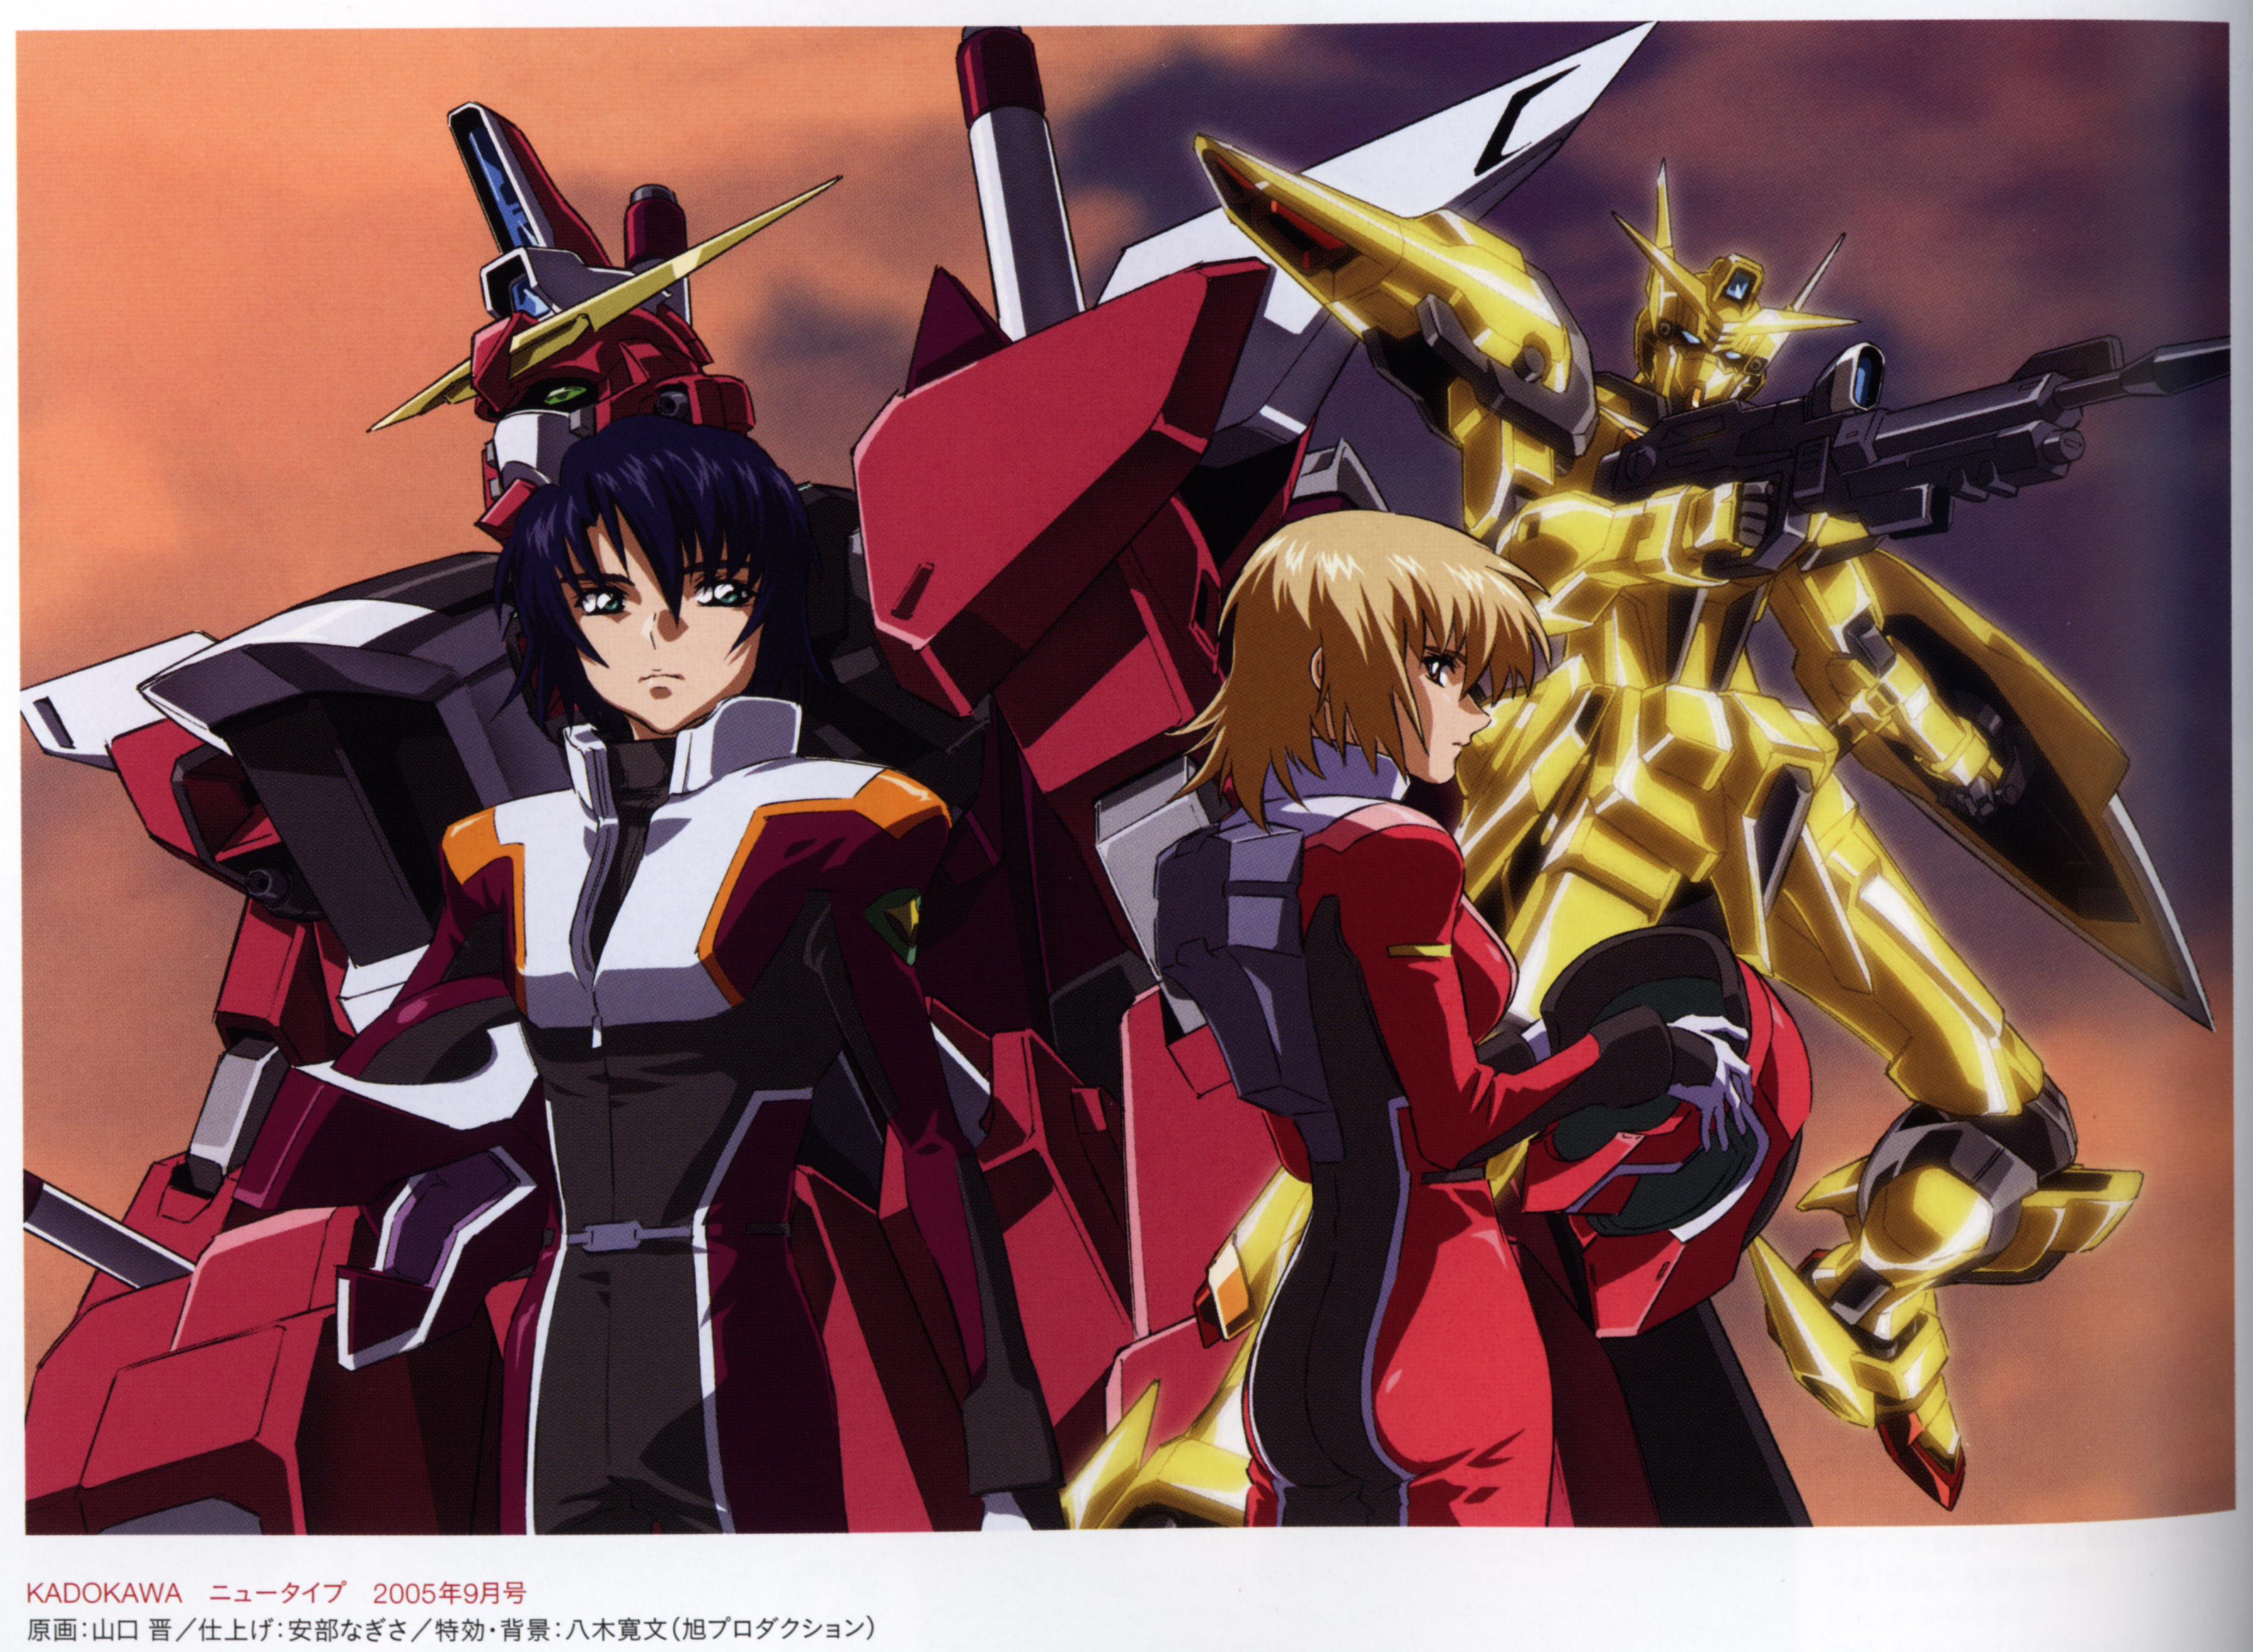 Anime Mobile Suit Gundam Seed Destiny Wallpaper Resolution 3576x2622 Id Wallha Com